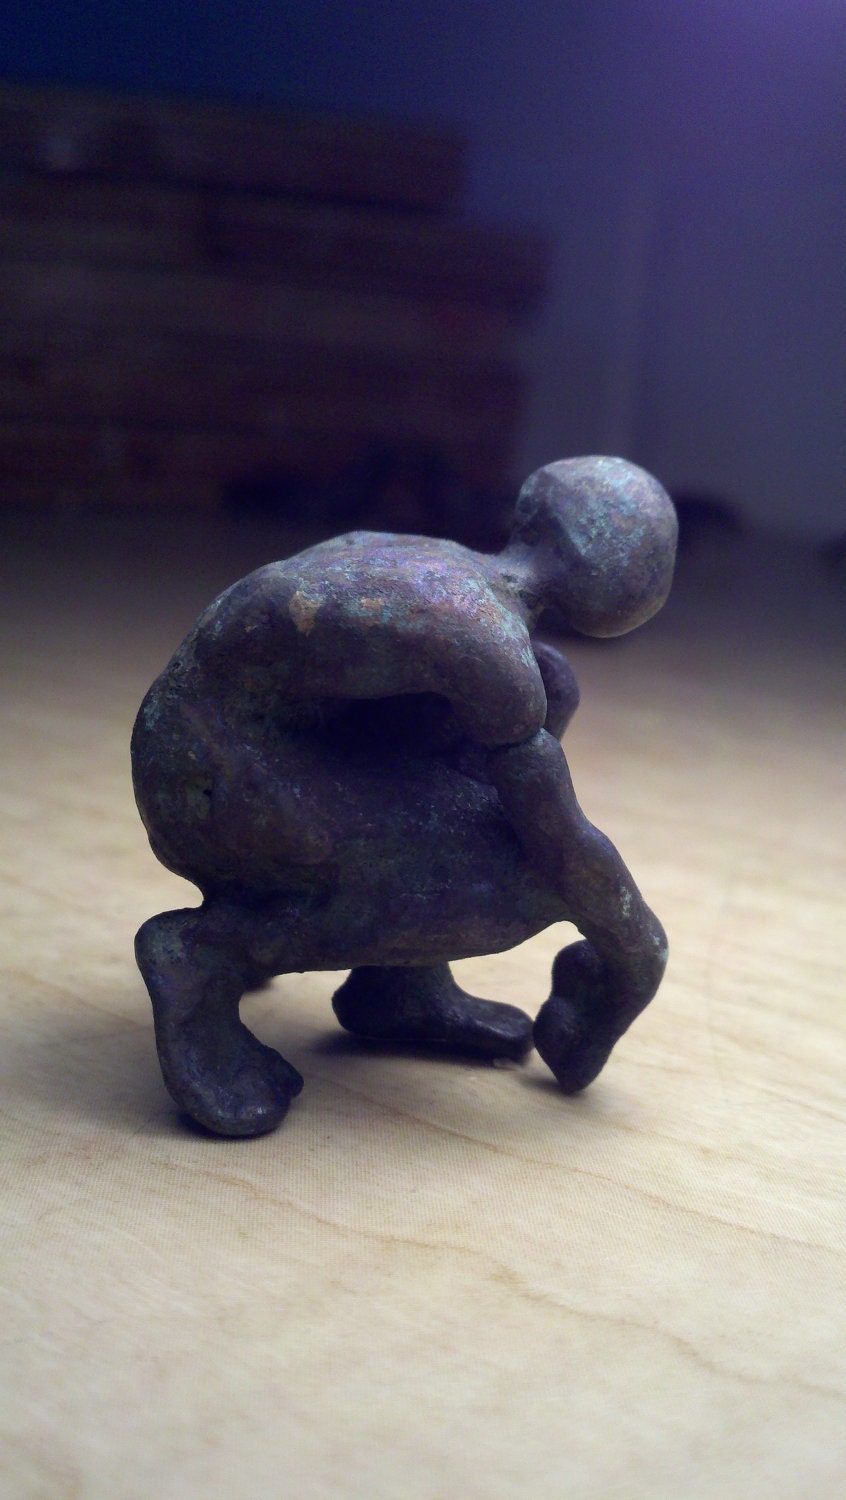 Crouching Small bronze figure - smallbronzes